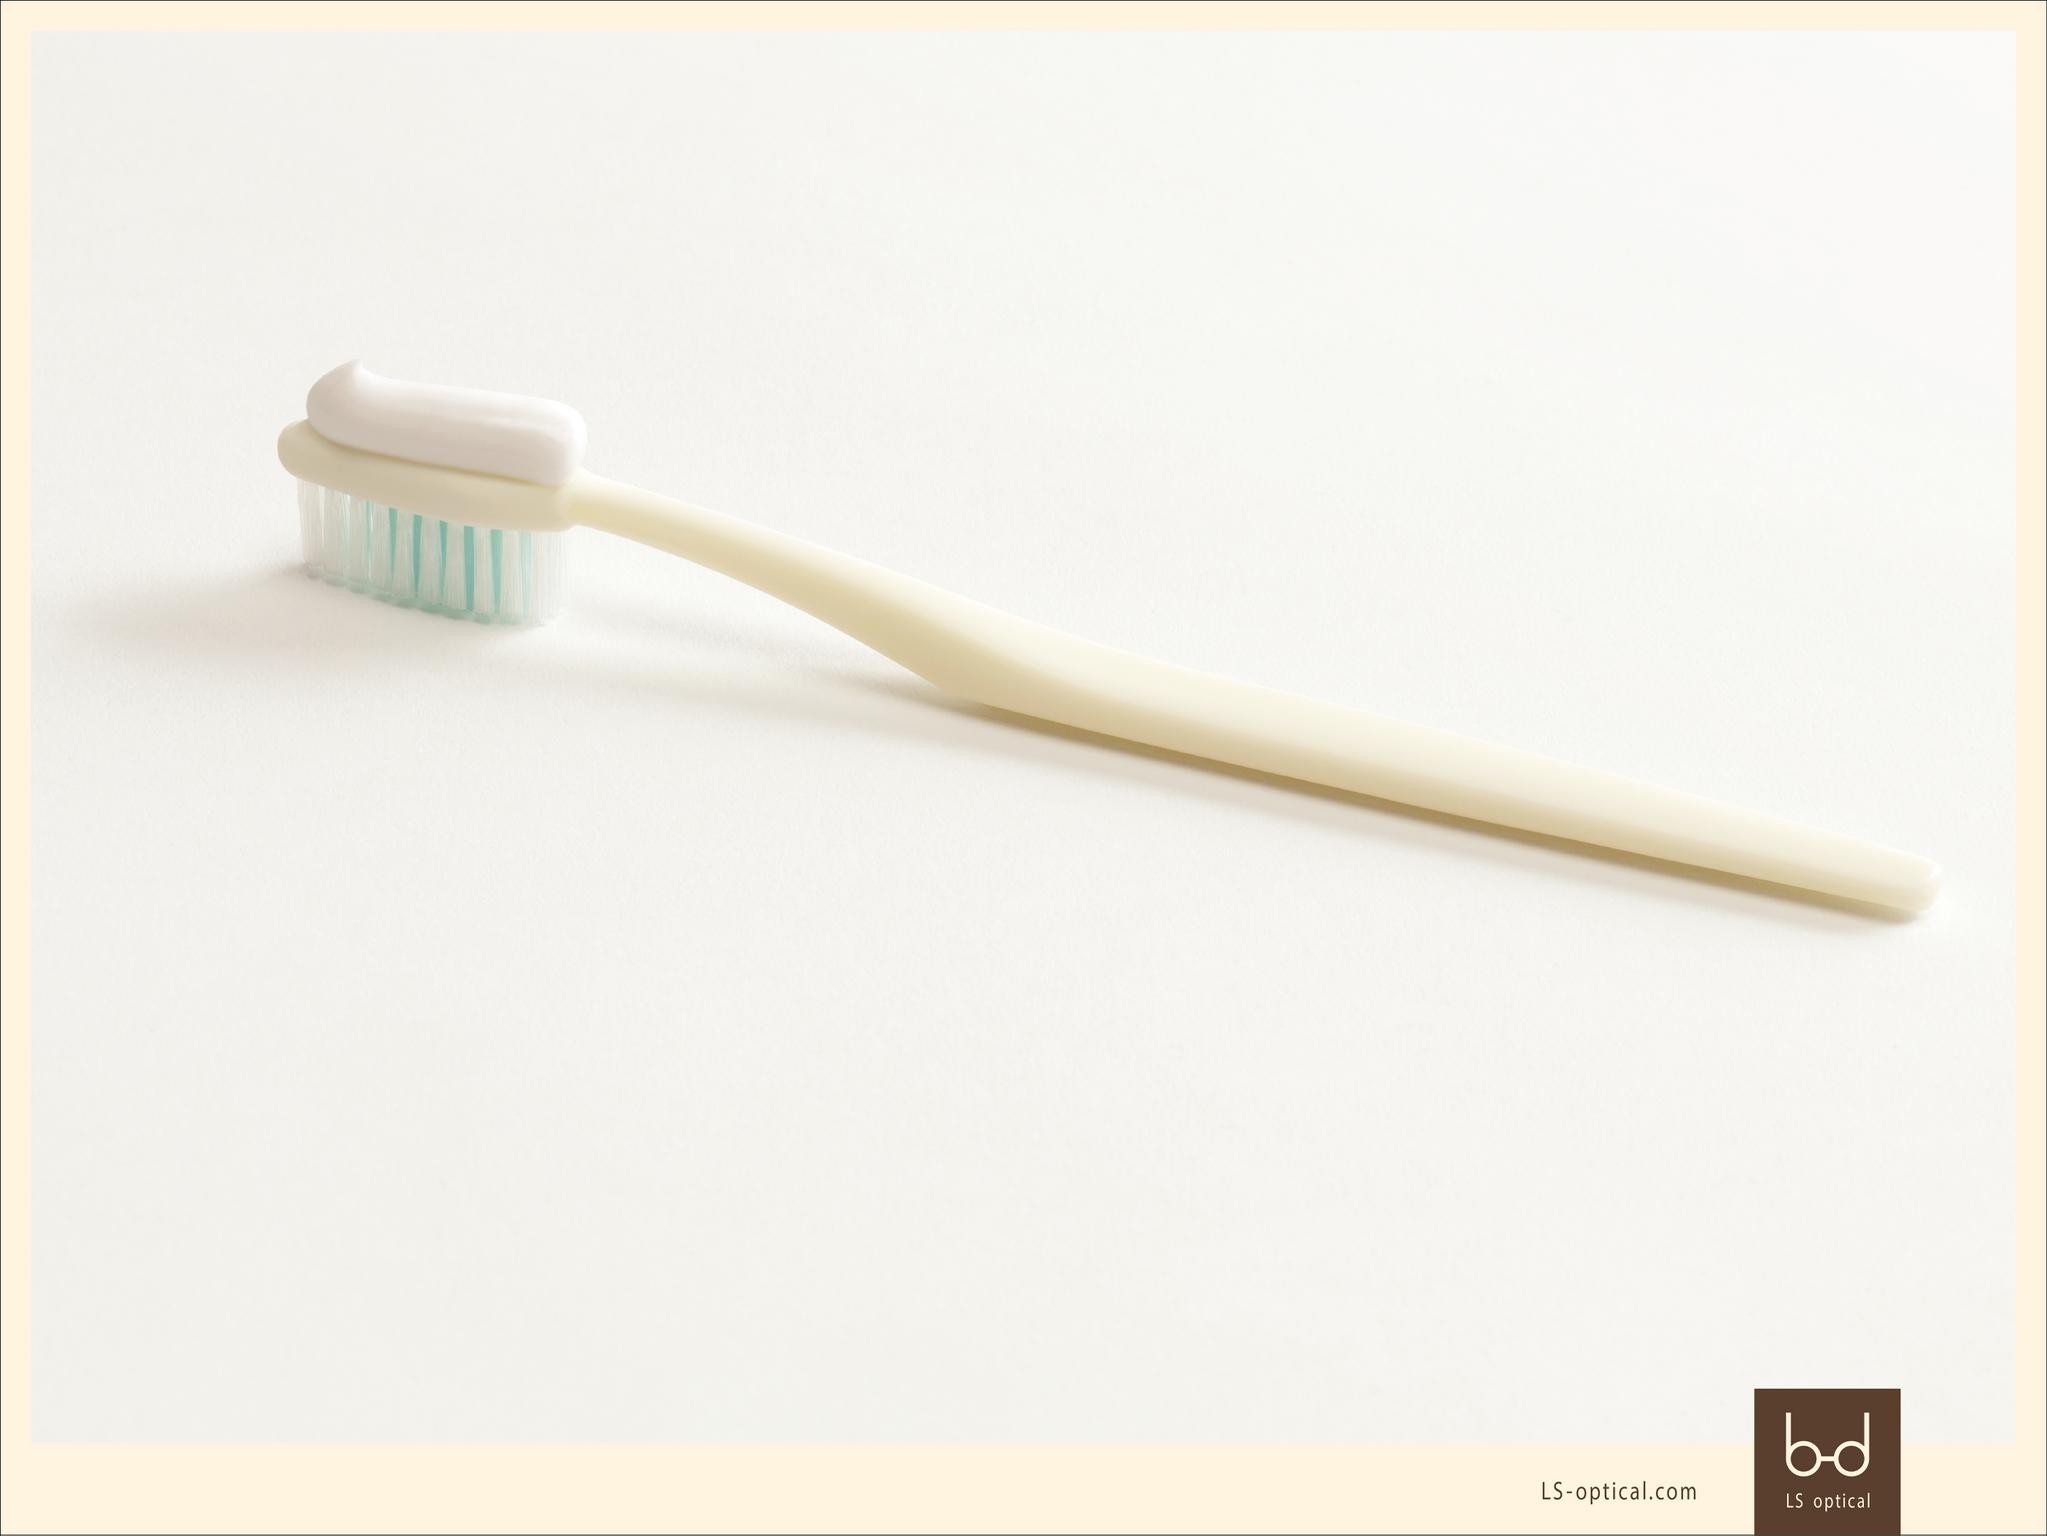 Misplaced series-Toothbrush